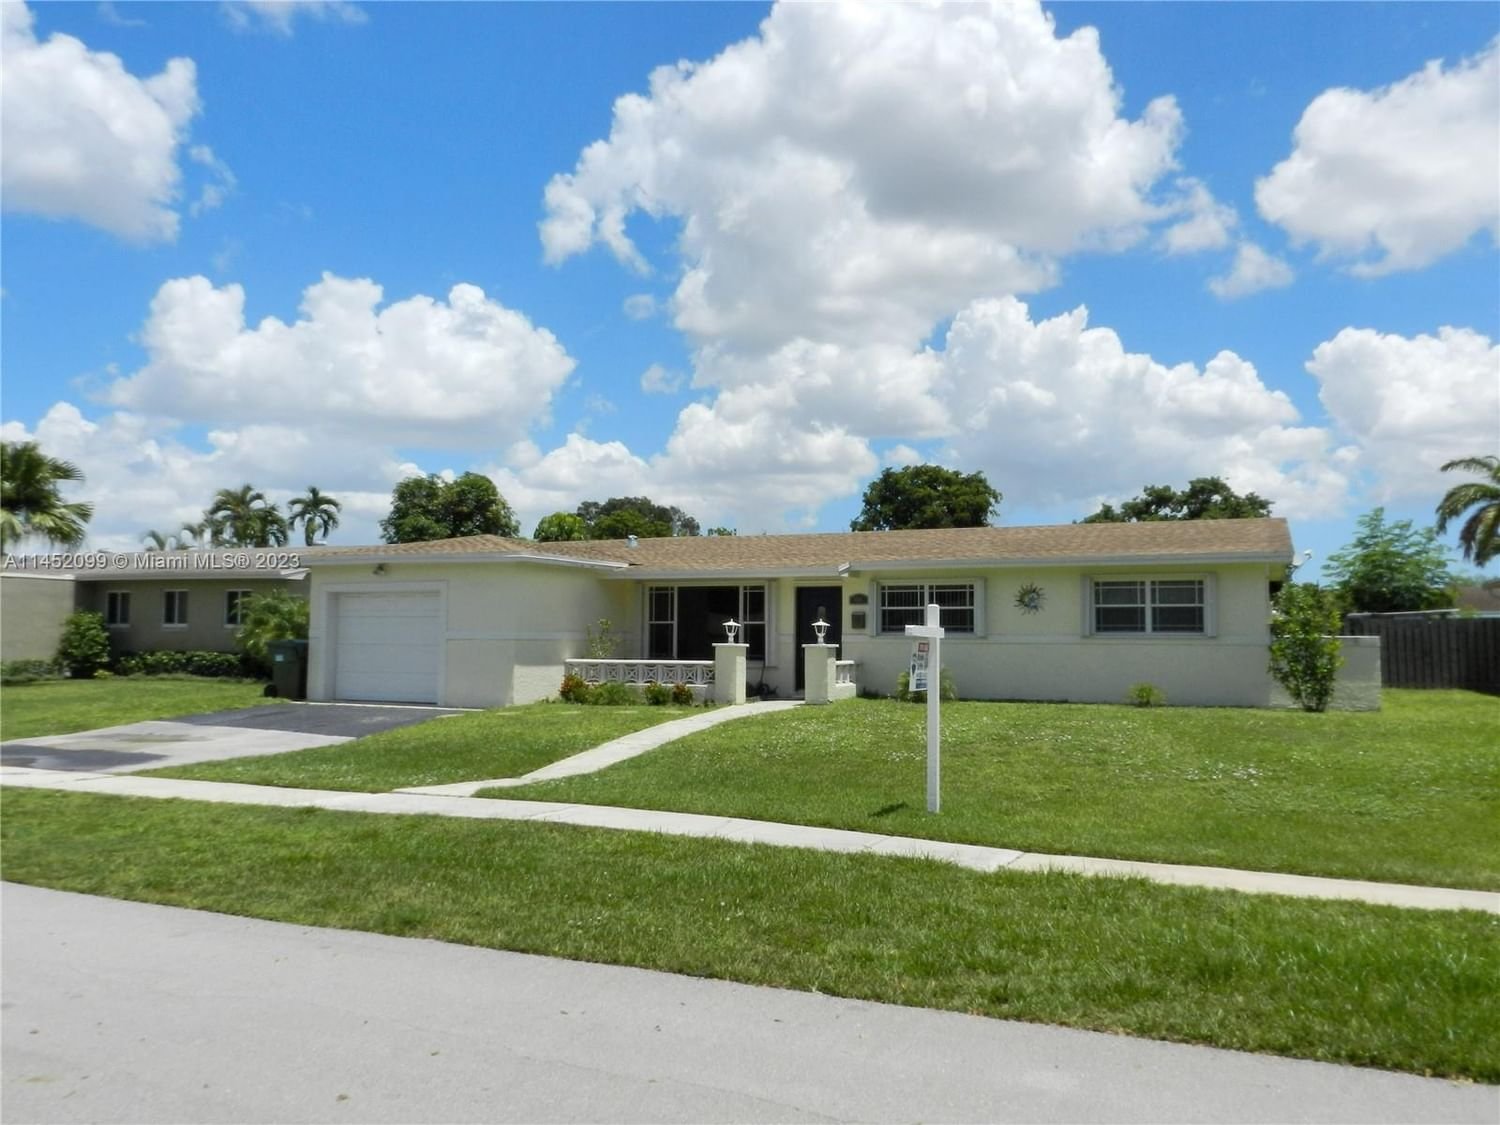 Real estate property located at 1811 88th Way, Broward County, Pembroke Pines, FL